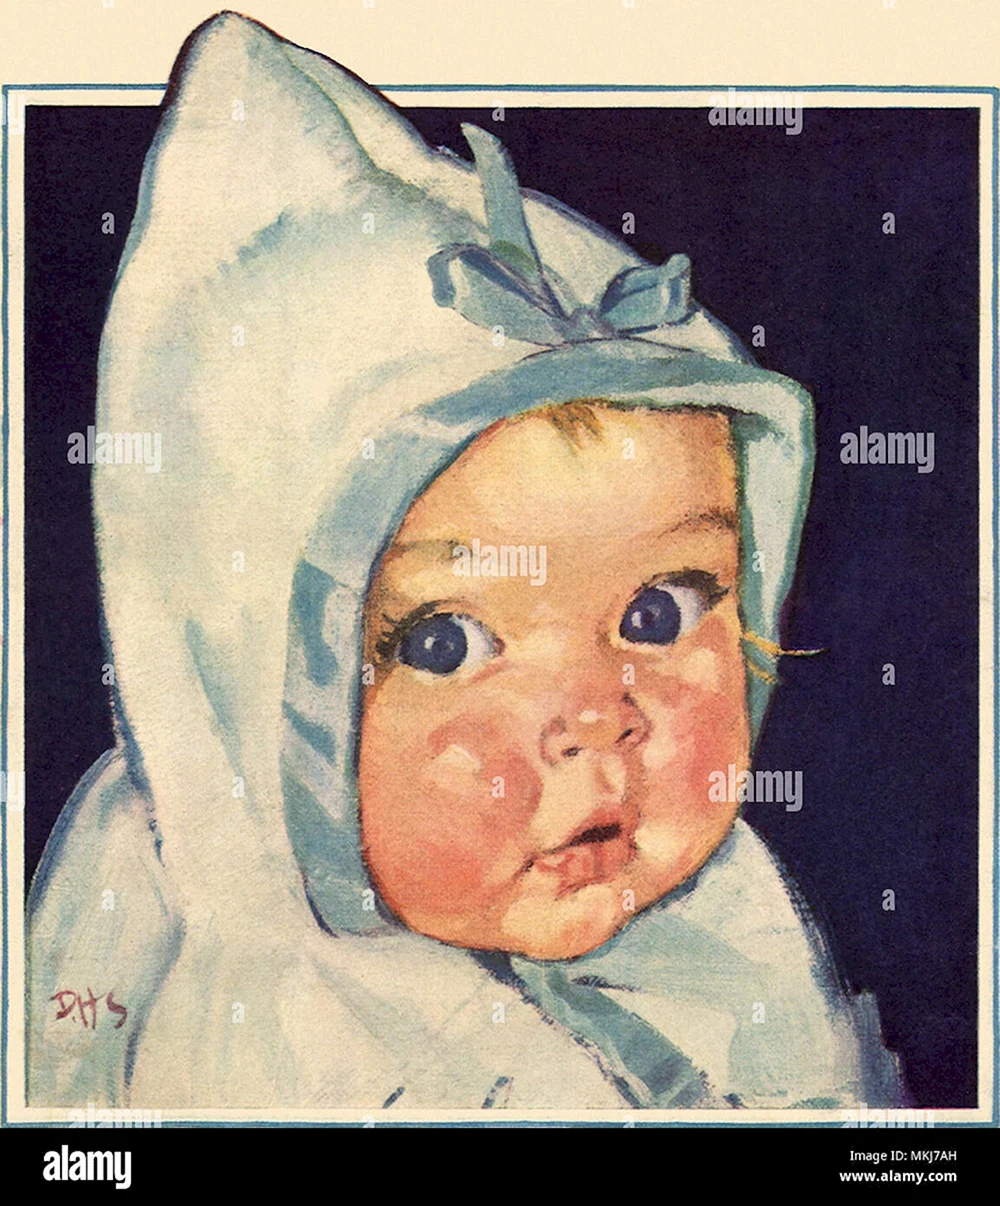 Советские открытки с младенцами